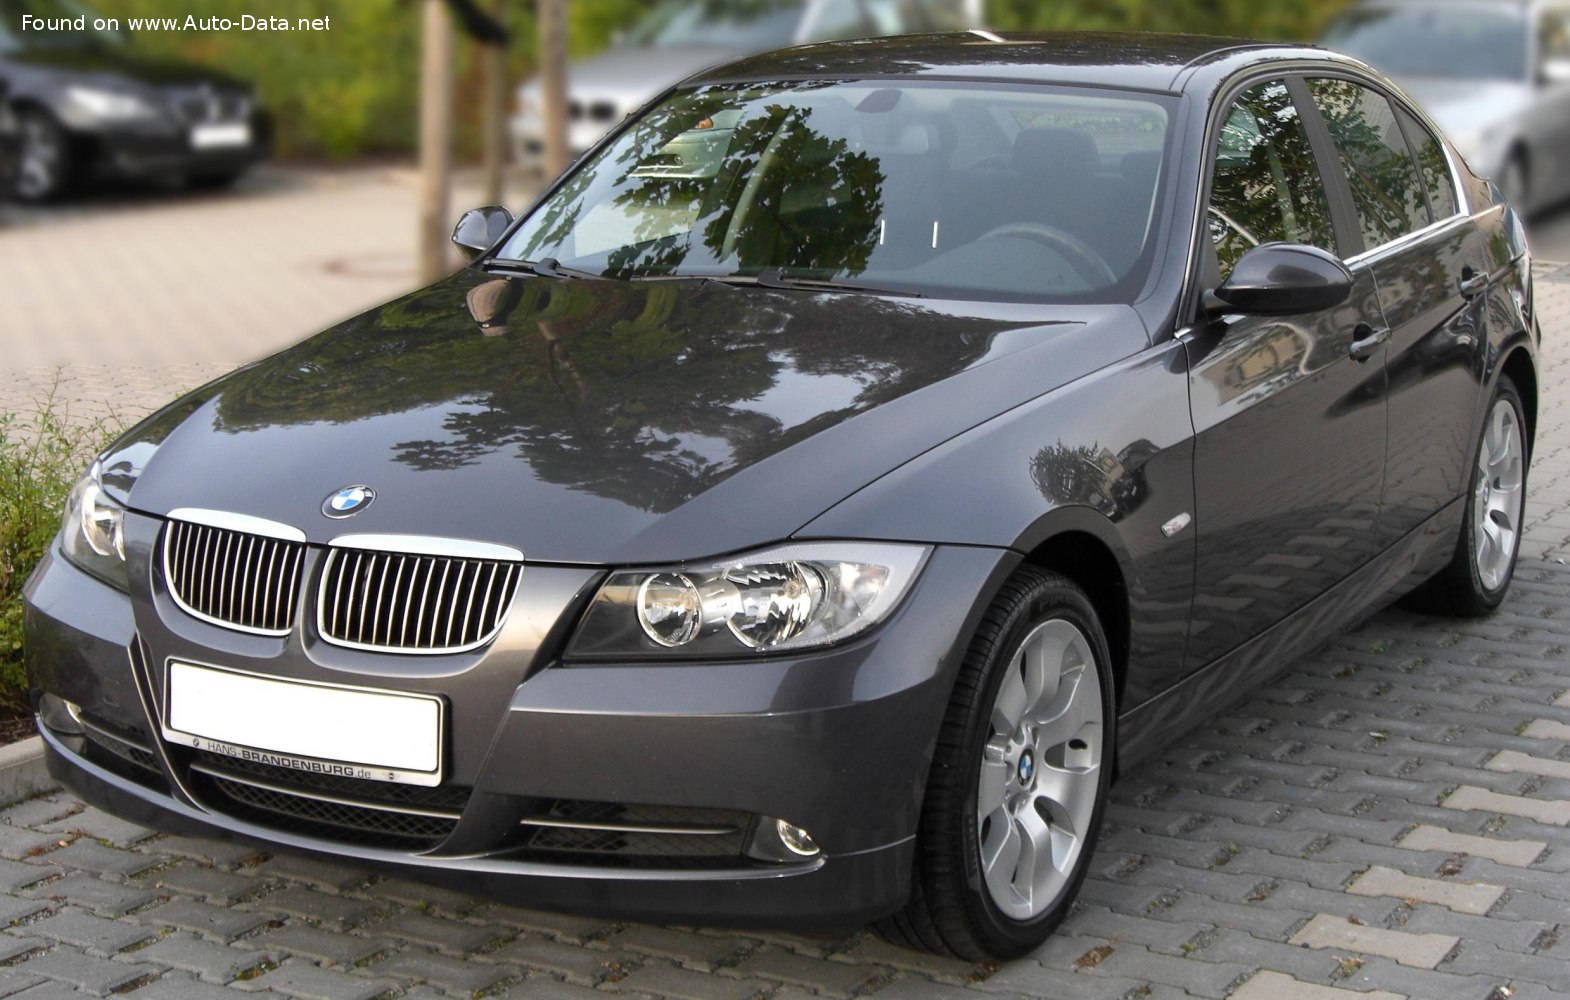 2005 BMW 3 Series Sedan (E90)  Technical Specs, Fuel consumption,  Dimensions